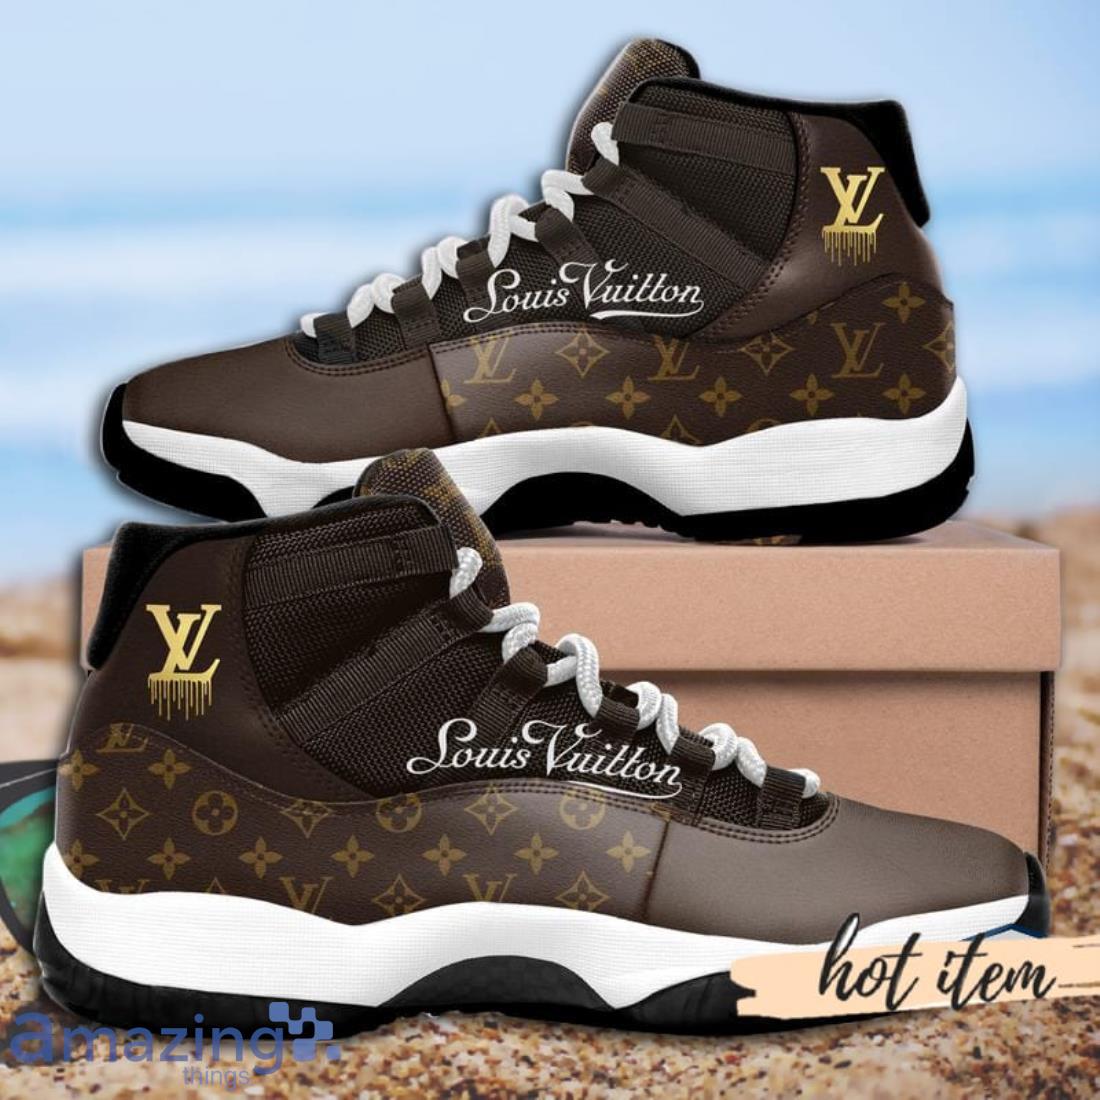 Louis Vuitton Air Jordan 11 Sneaker New Trending